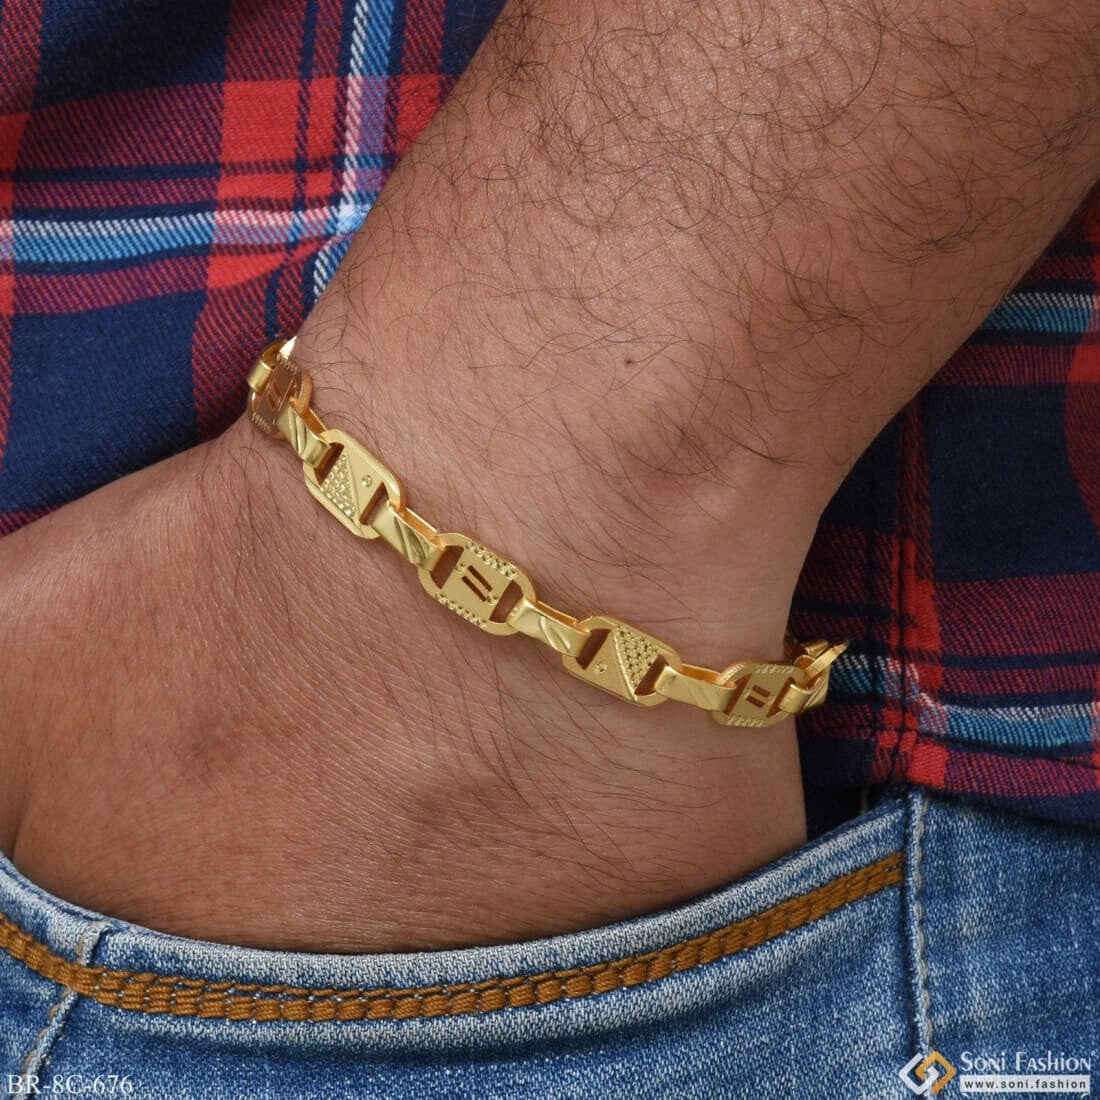 3 Line Nawabi Best Quality Durable Design Gold Plated Bracelet for Men -  Style C835 at Rs 1100.00 | Rajkot| ID: 2852605616530